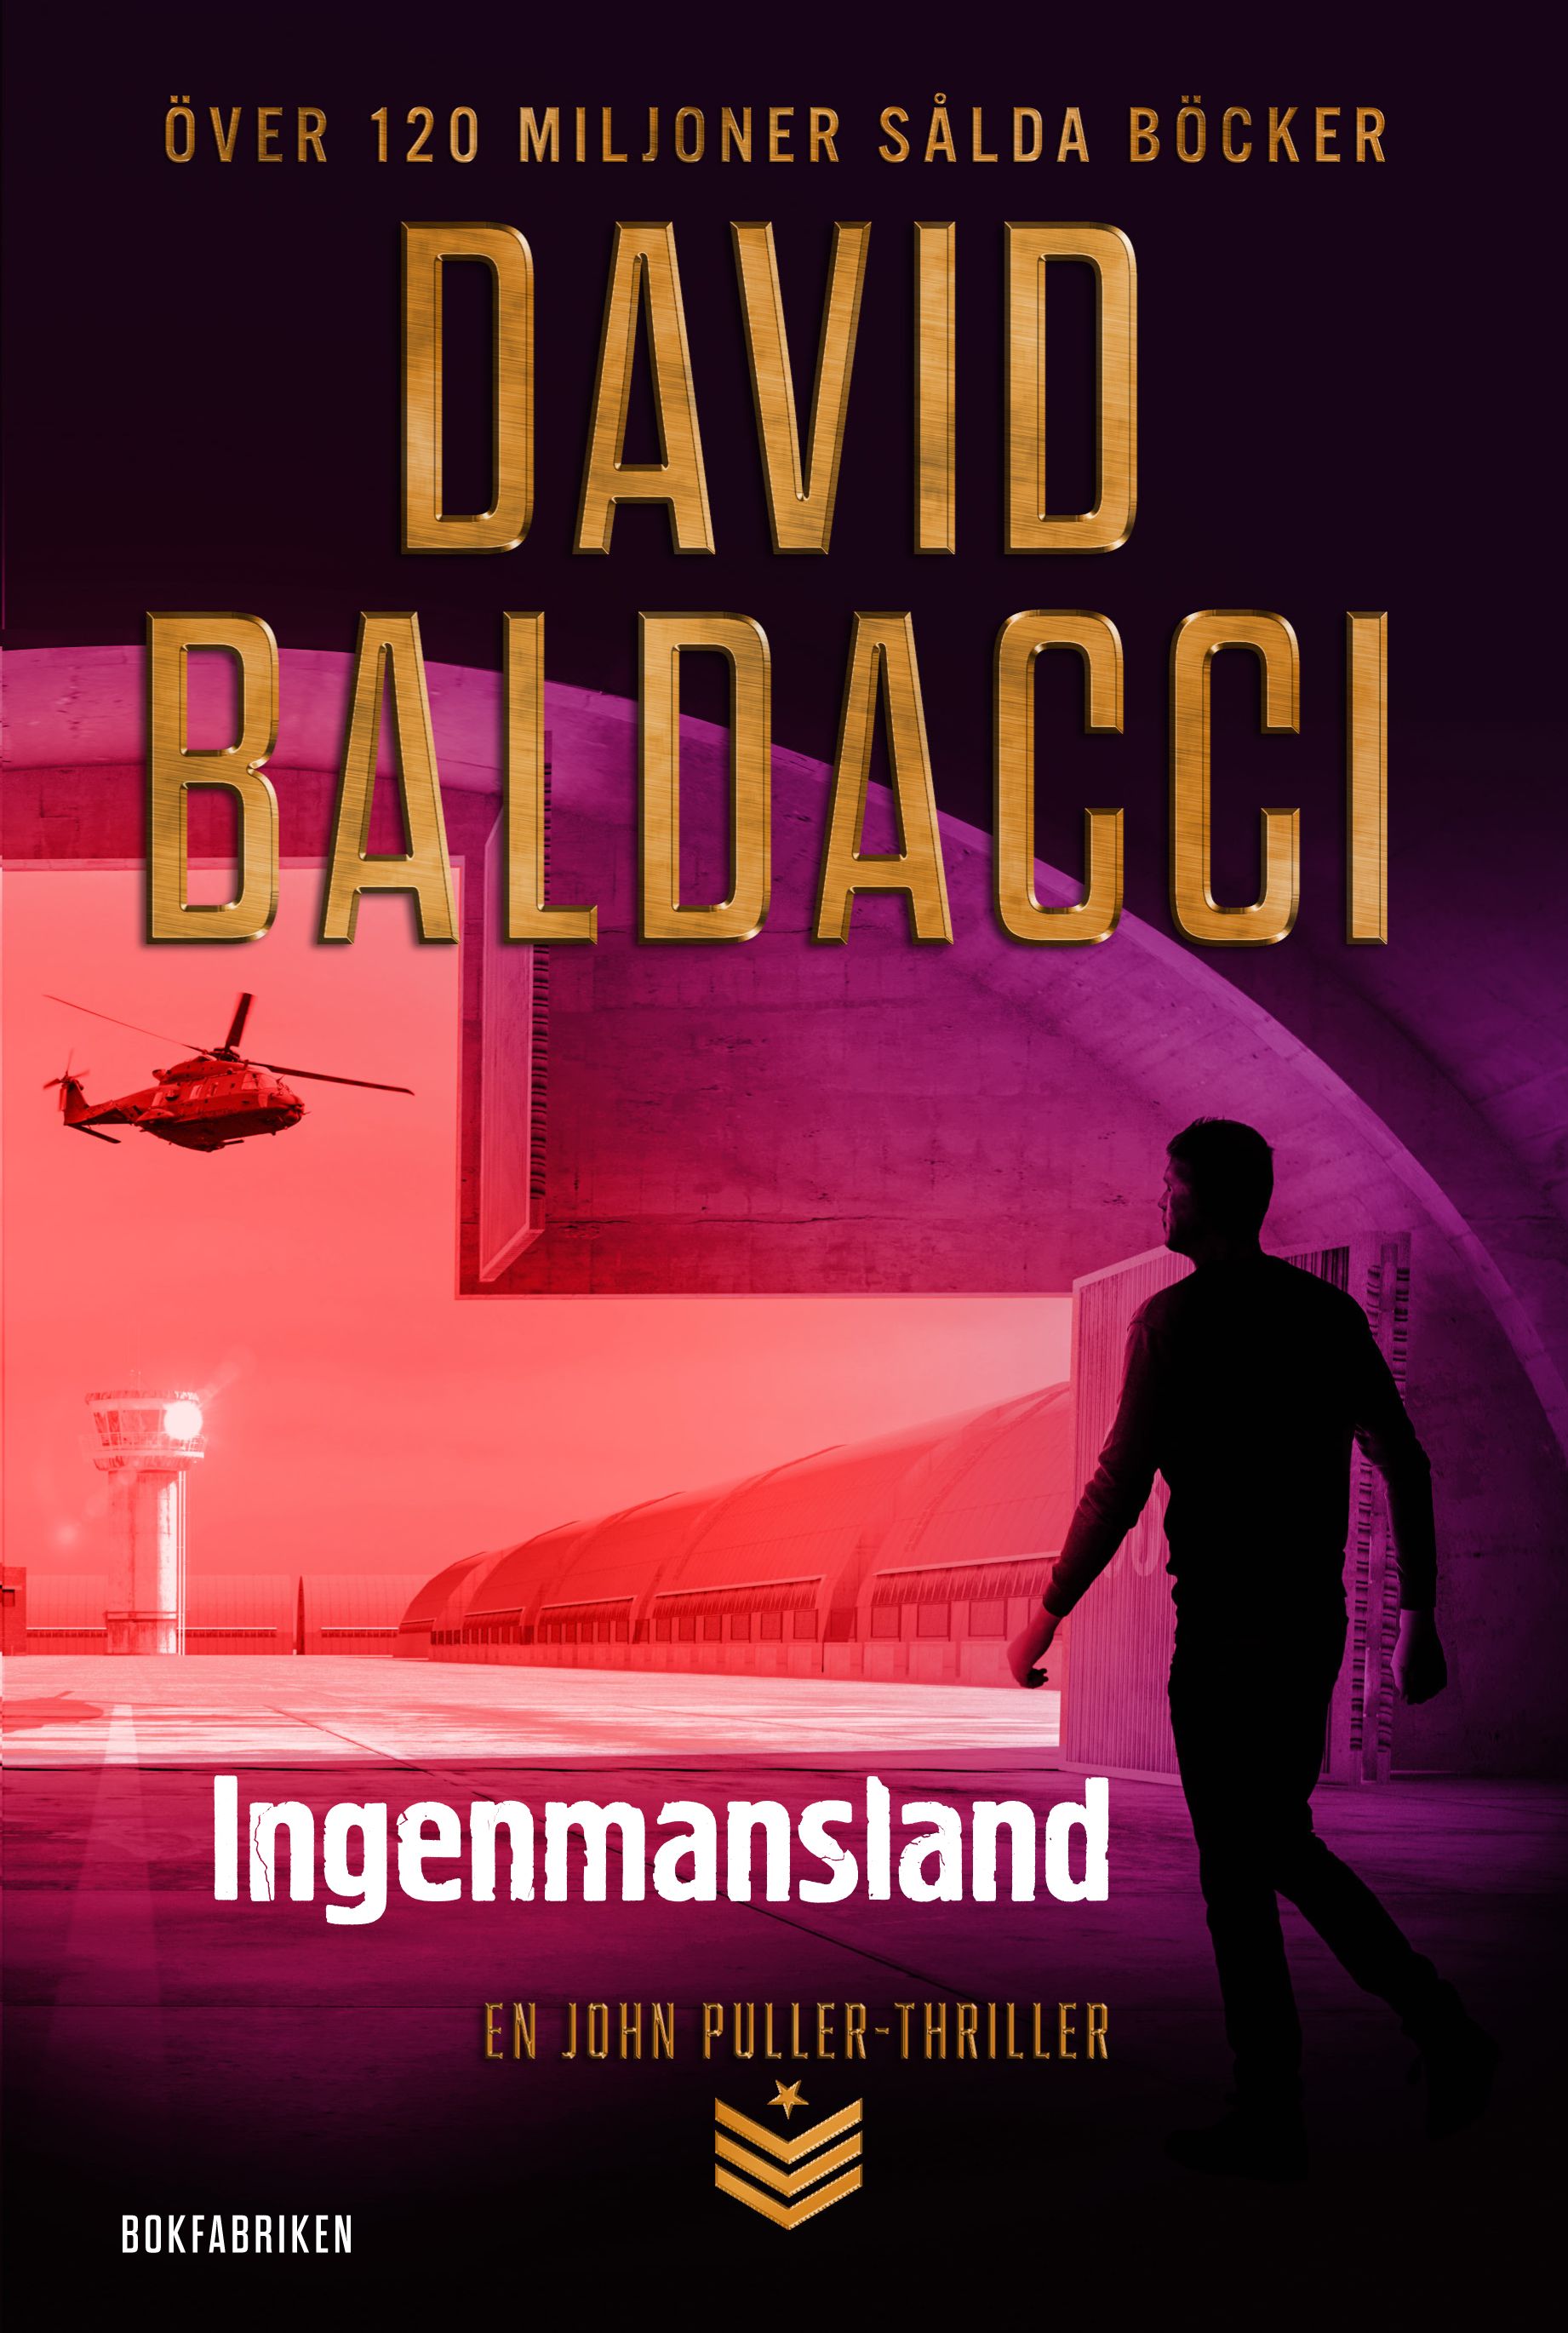 Ingenmansland, eBook by David Baldacci